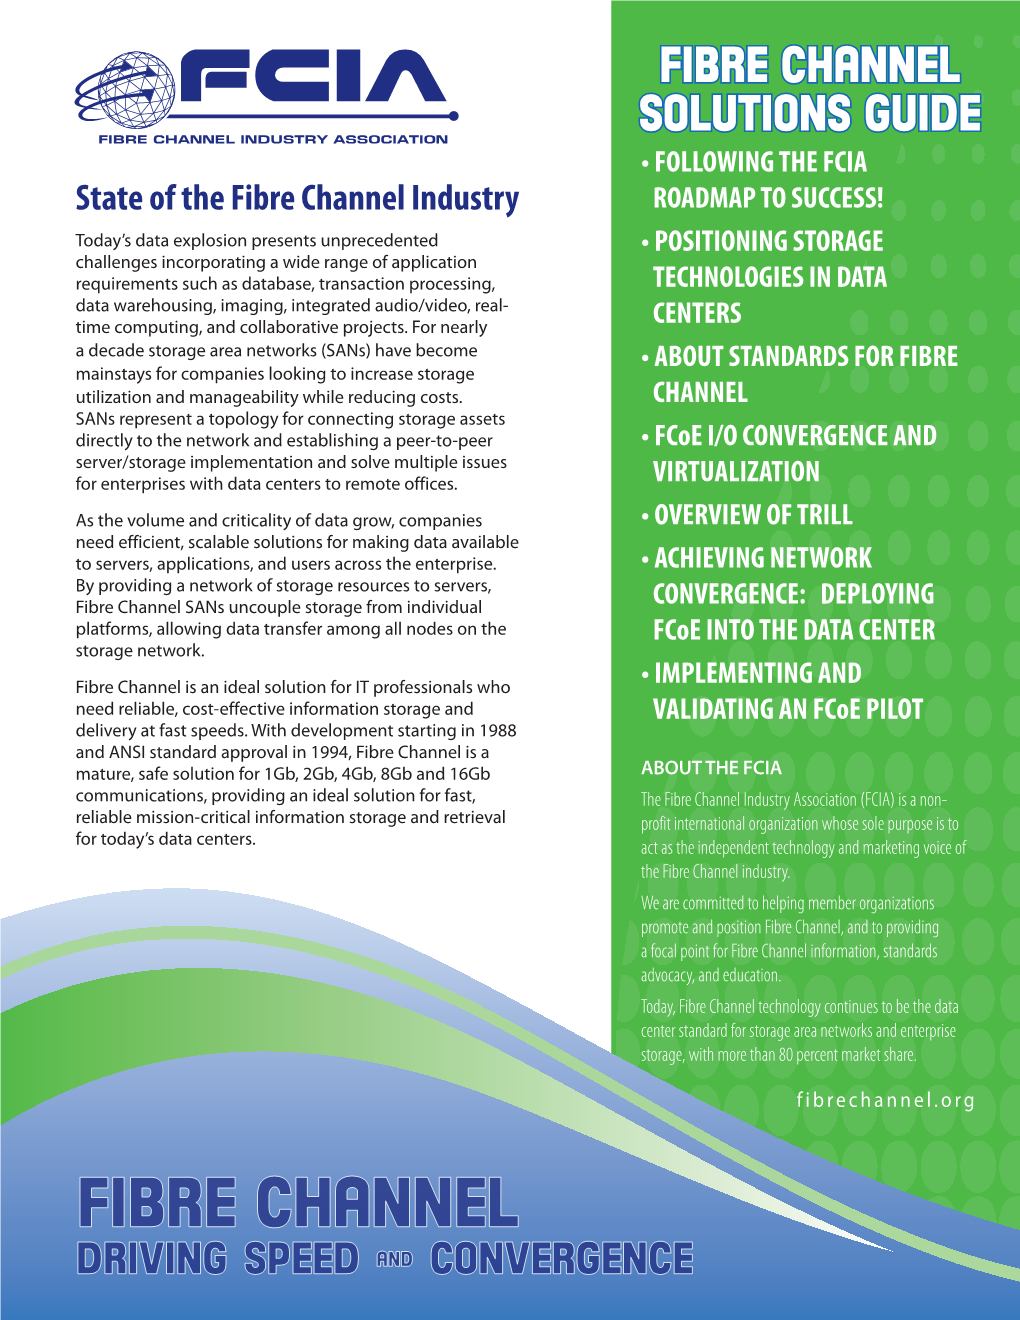 Fibre Channel Industry Association